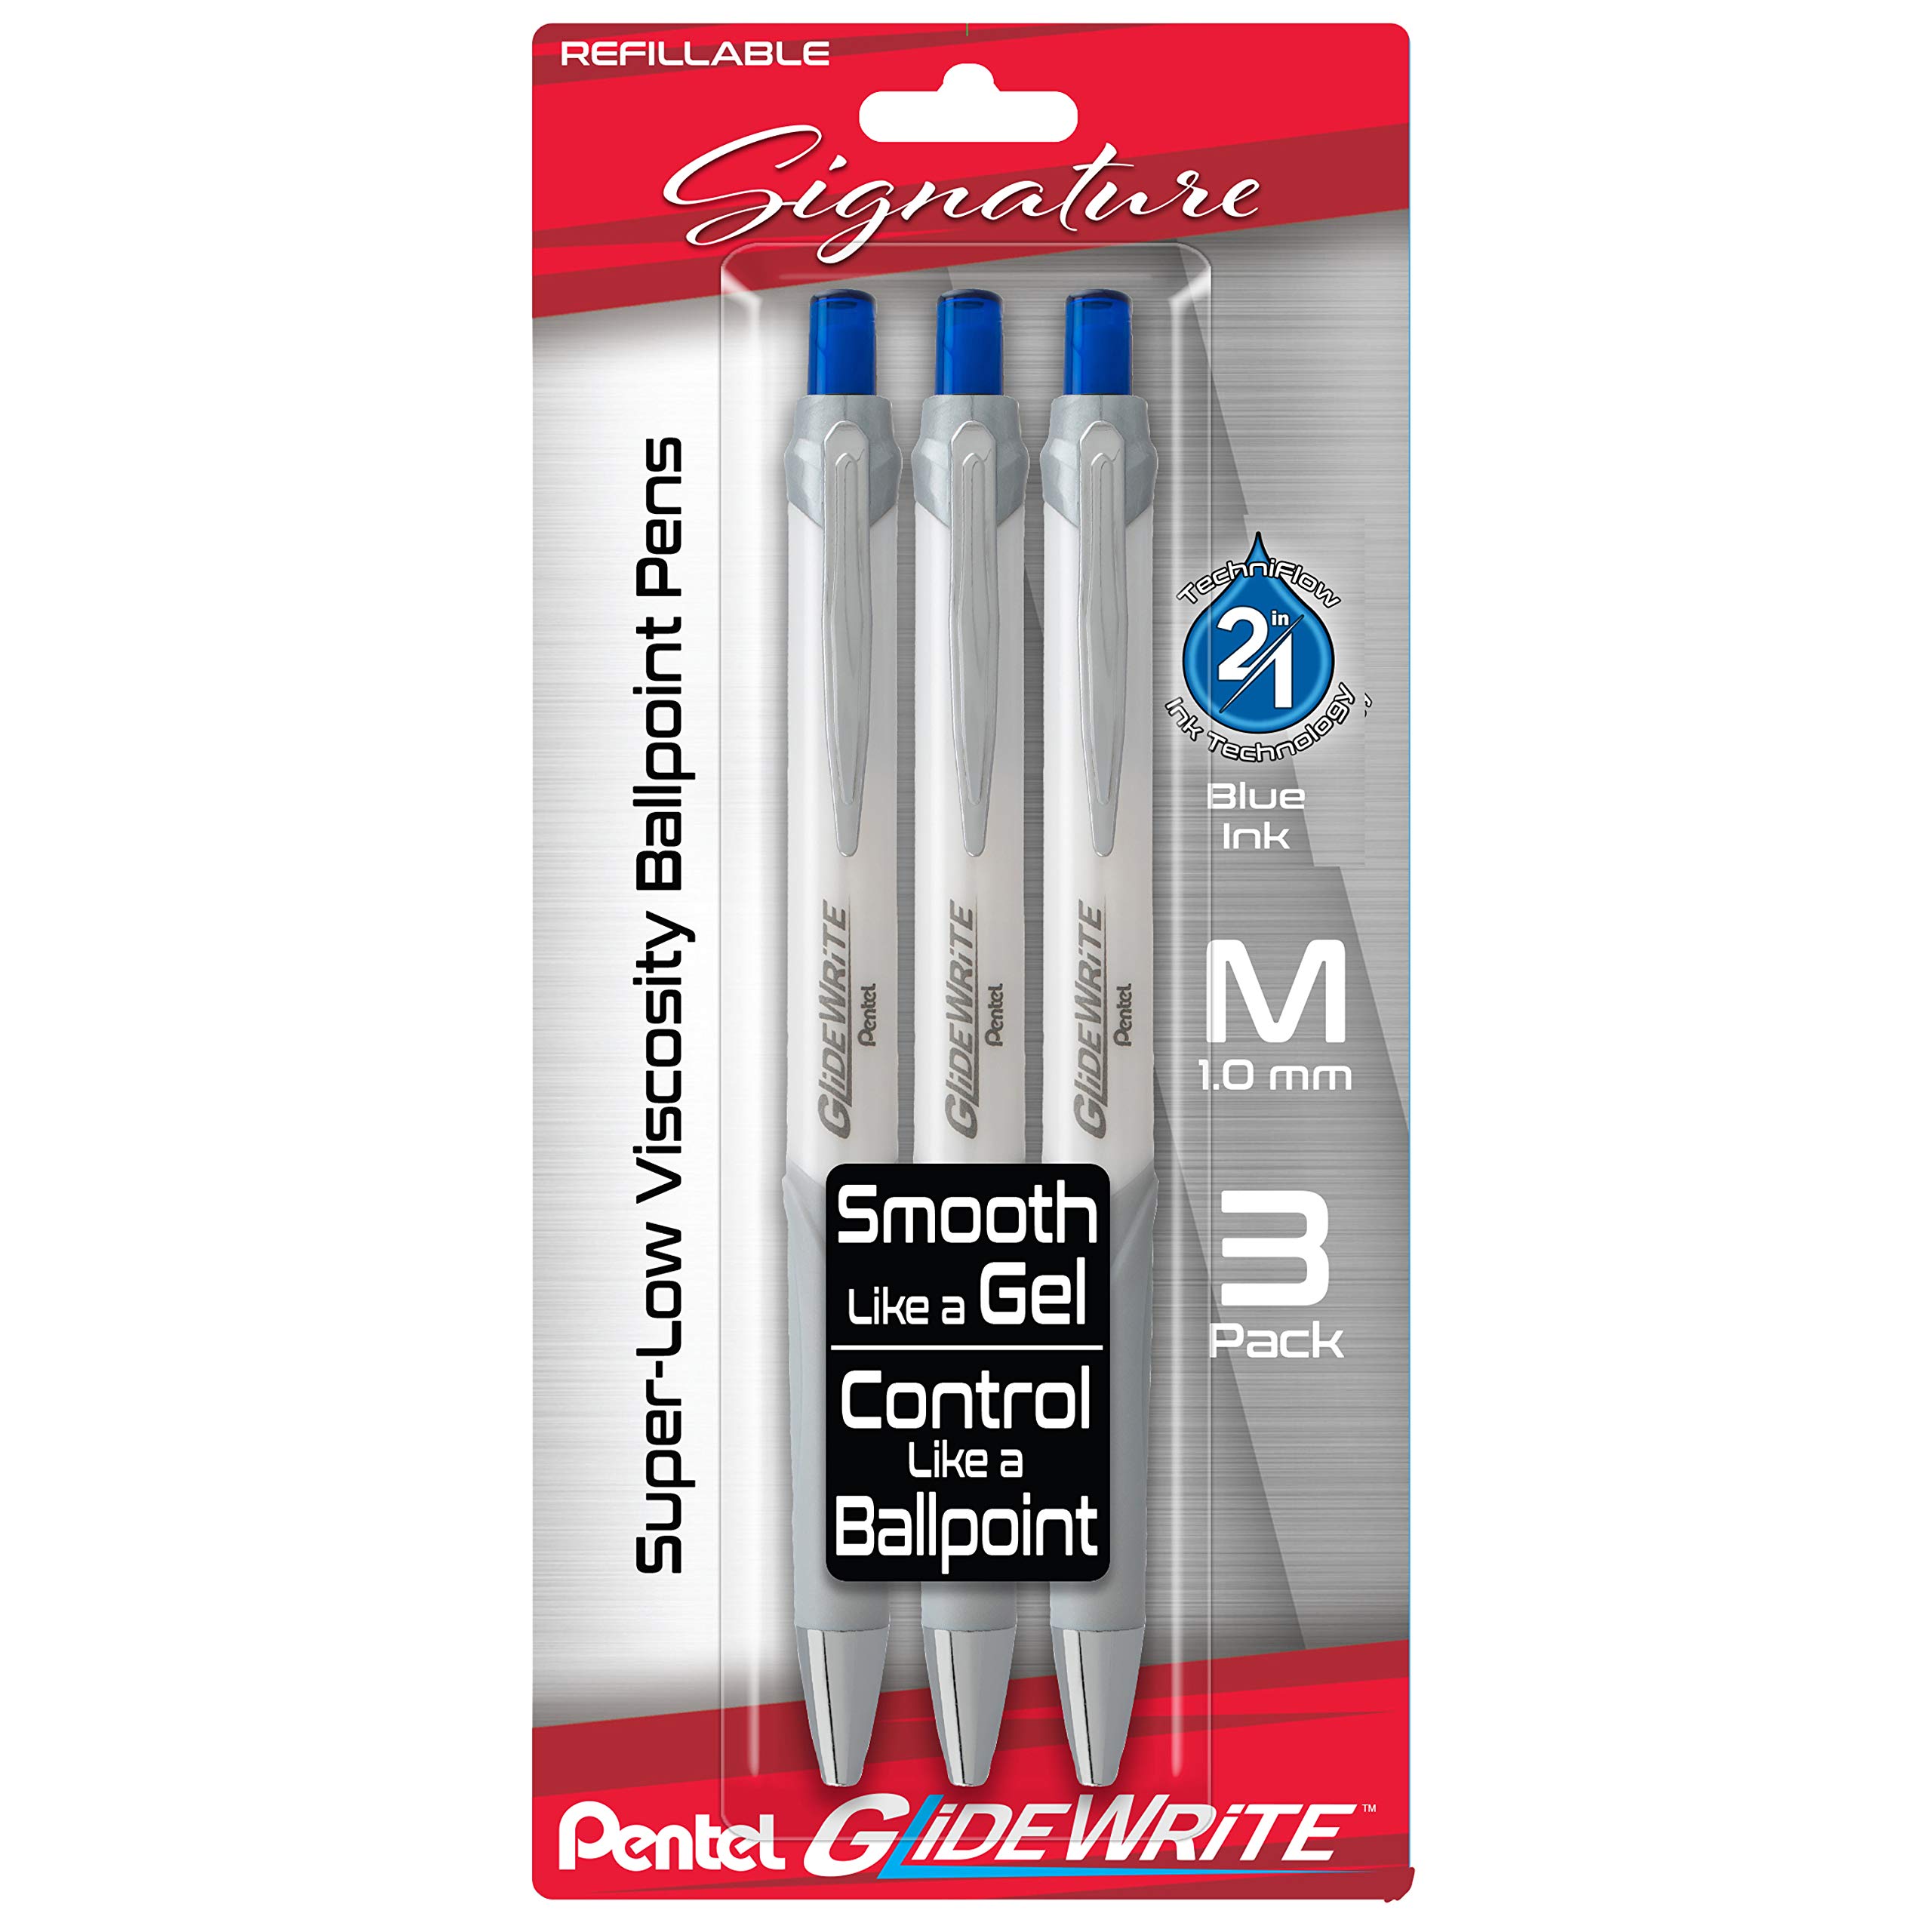 Pentel Glidewrite Signature Ballpoint Pen, (1.0mm) Medium, White Barrel, Blue Ink, 3-pk (BX930WBP3C)